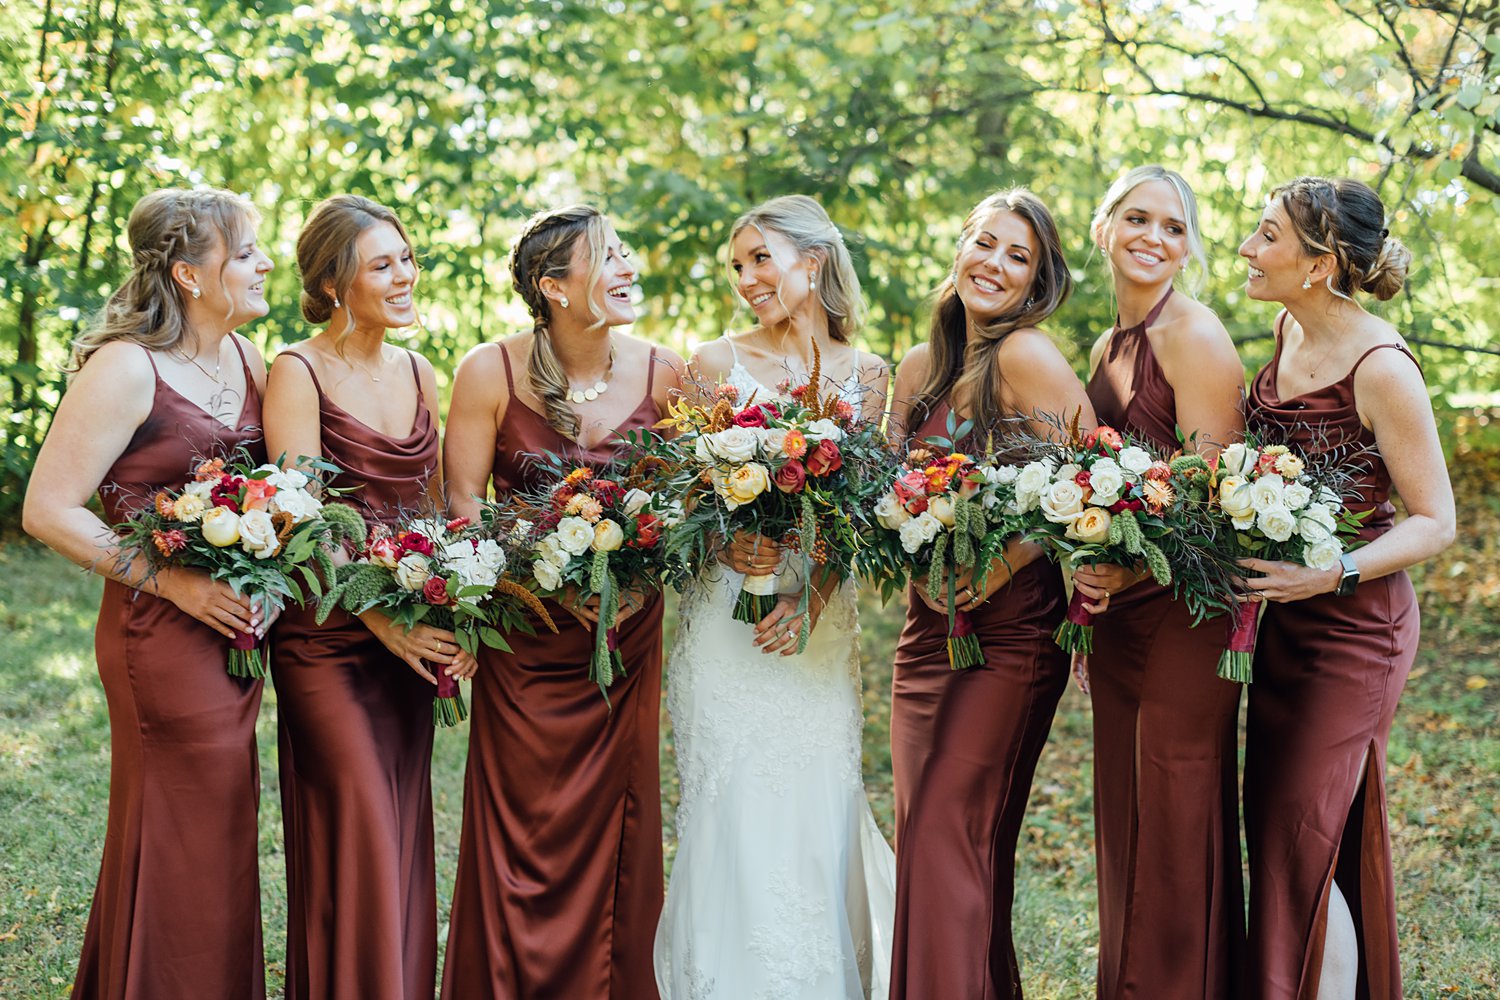 Shelby + Tim - Bartram's Garden Wedding - Philadelphia Wedding Photographer - Alison Dunn Photography photo